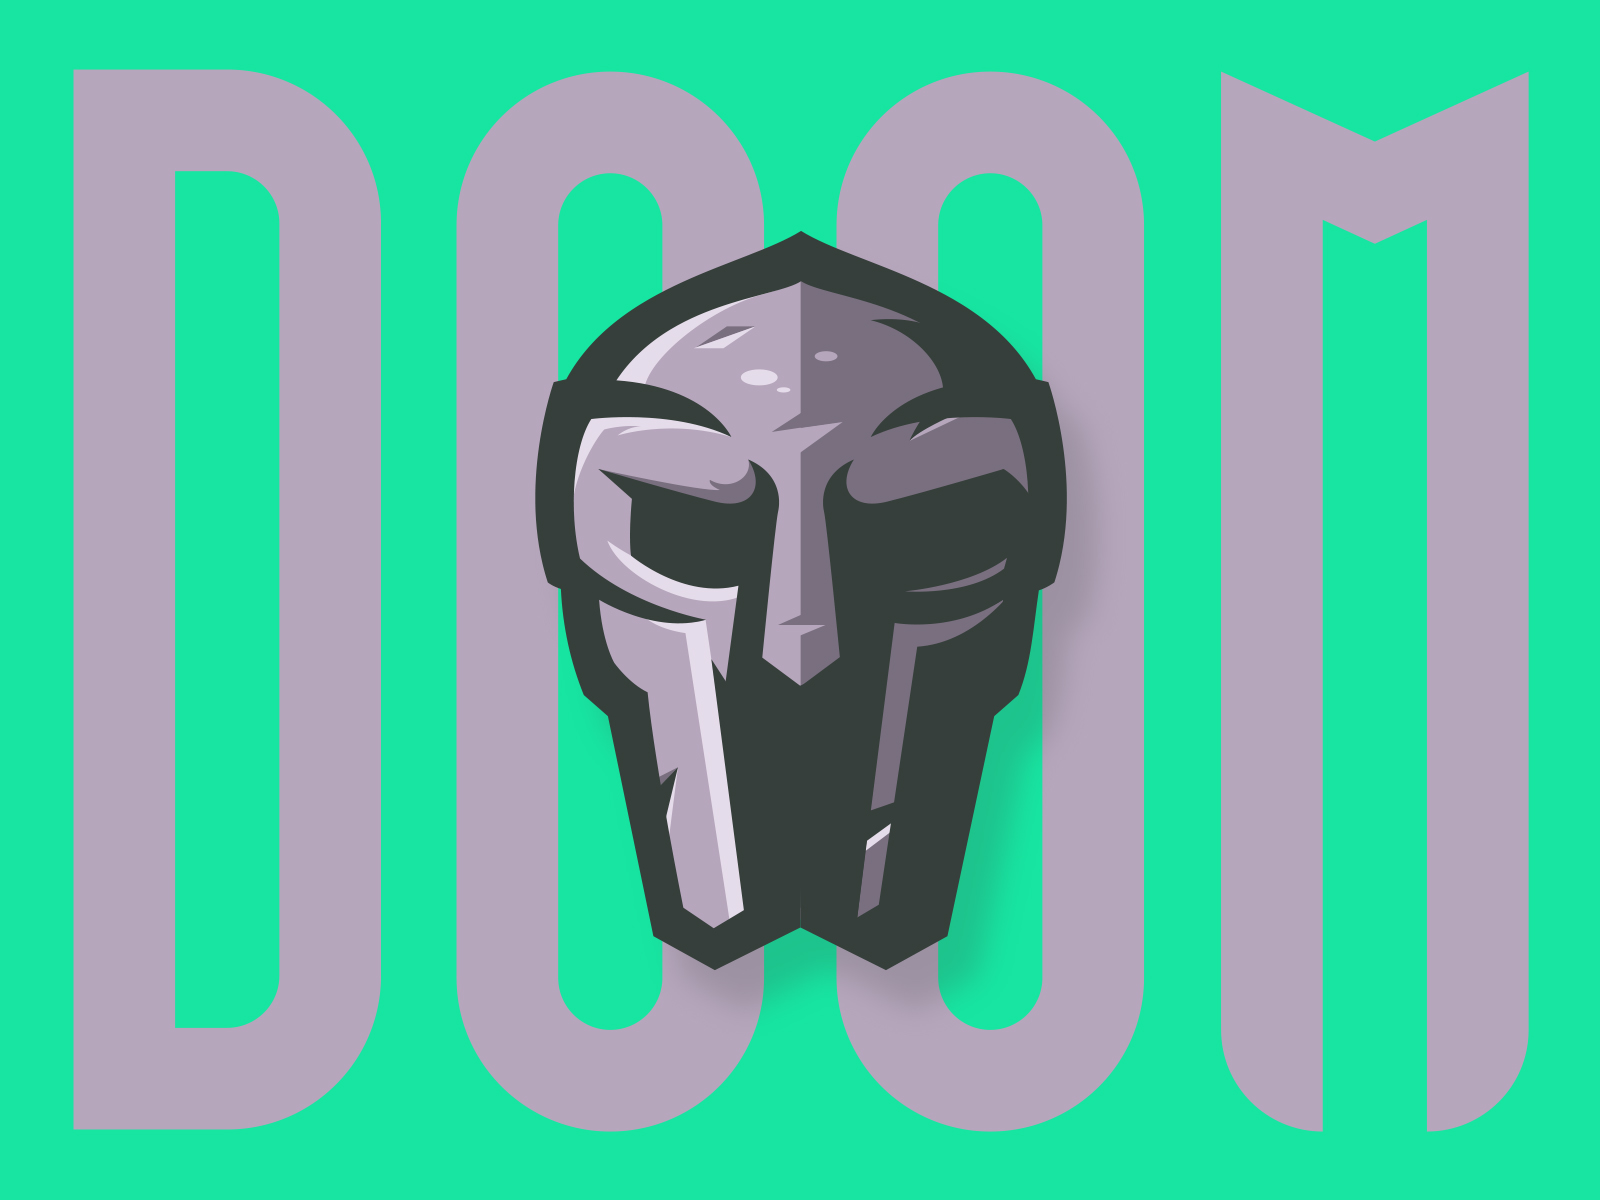 mf doom logo